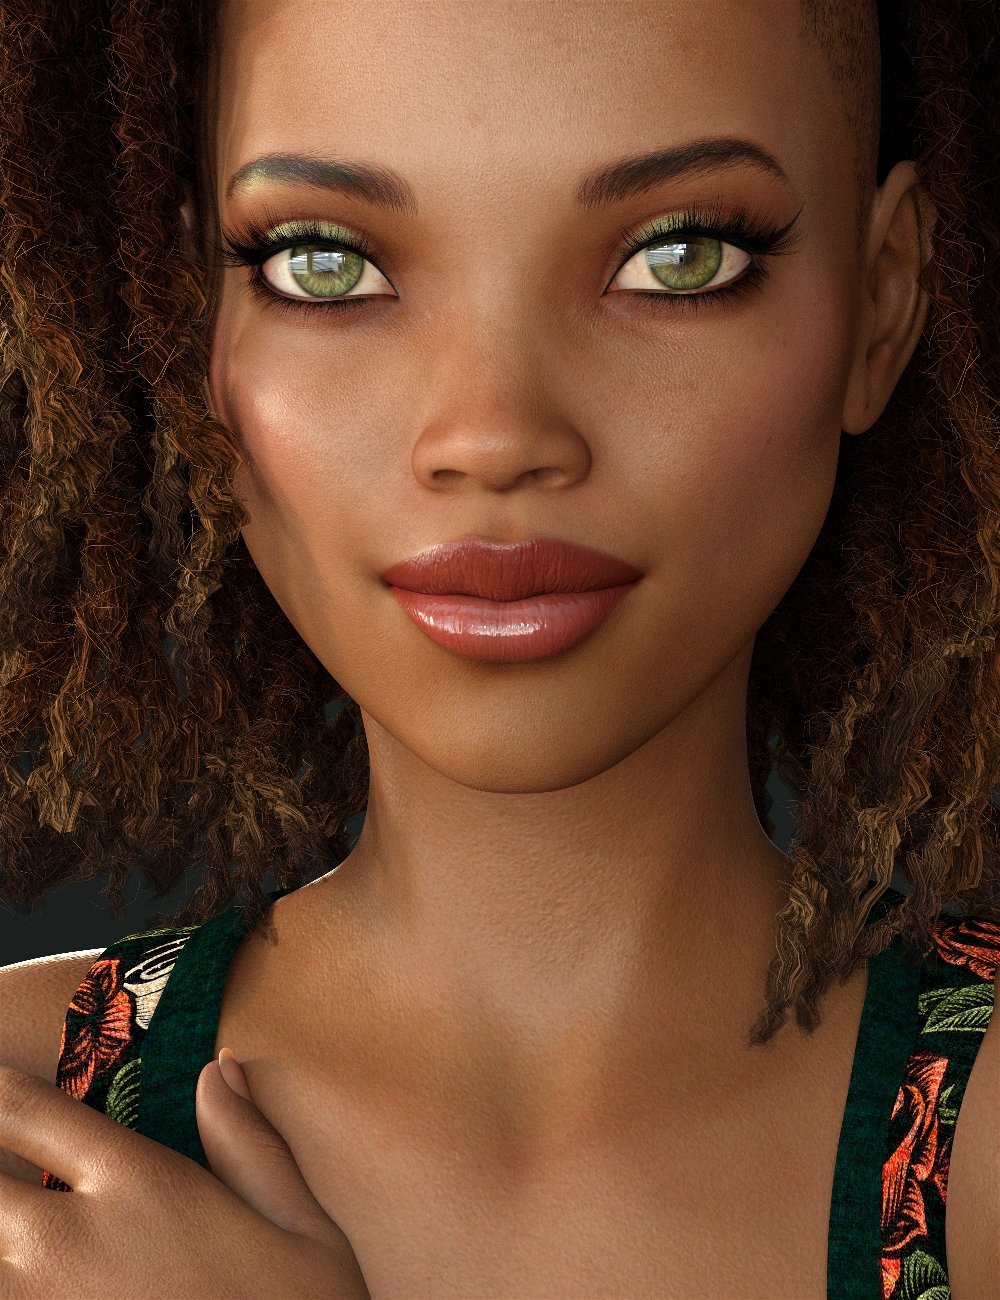 Keyana for Genesis 8 Female by: Handspan Studios, 3D Models by Daz 3D